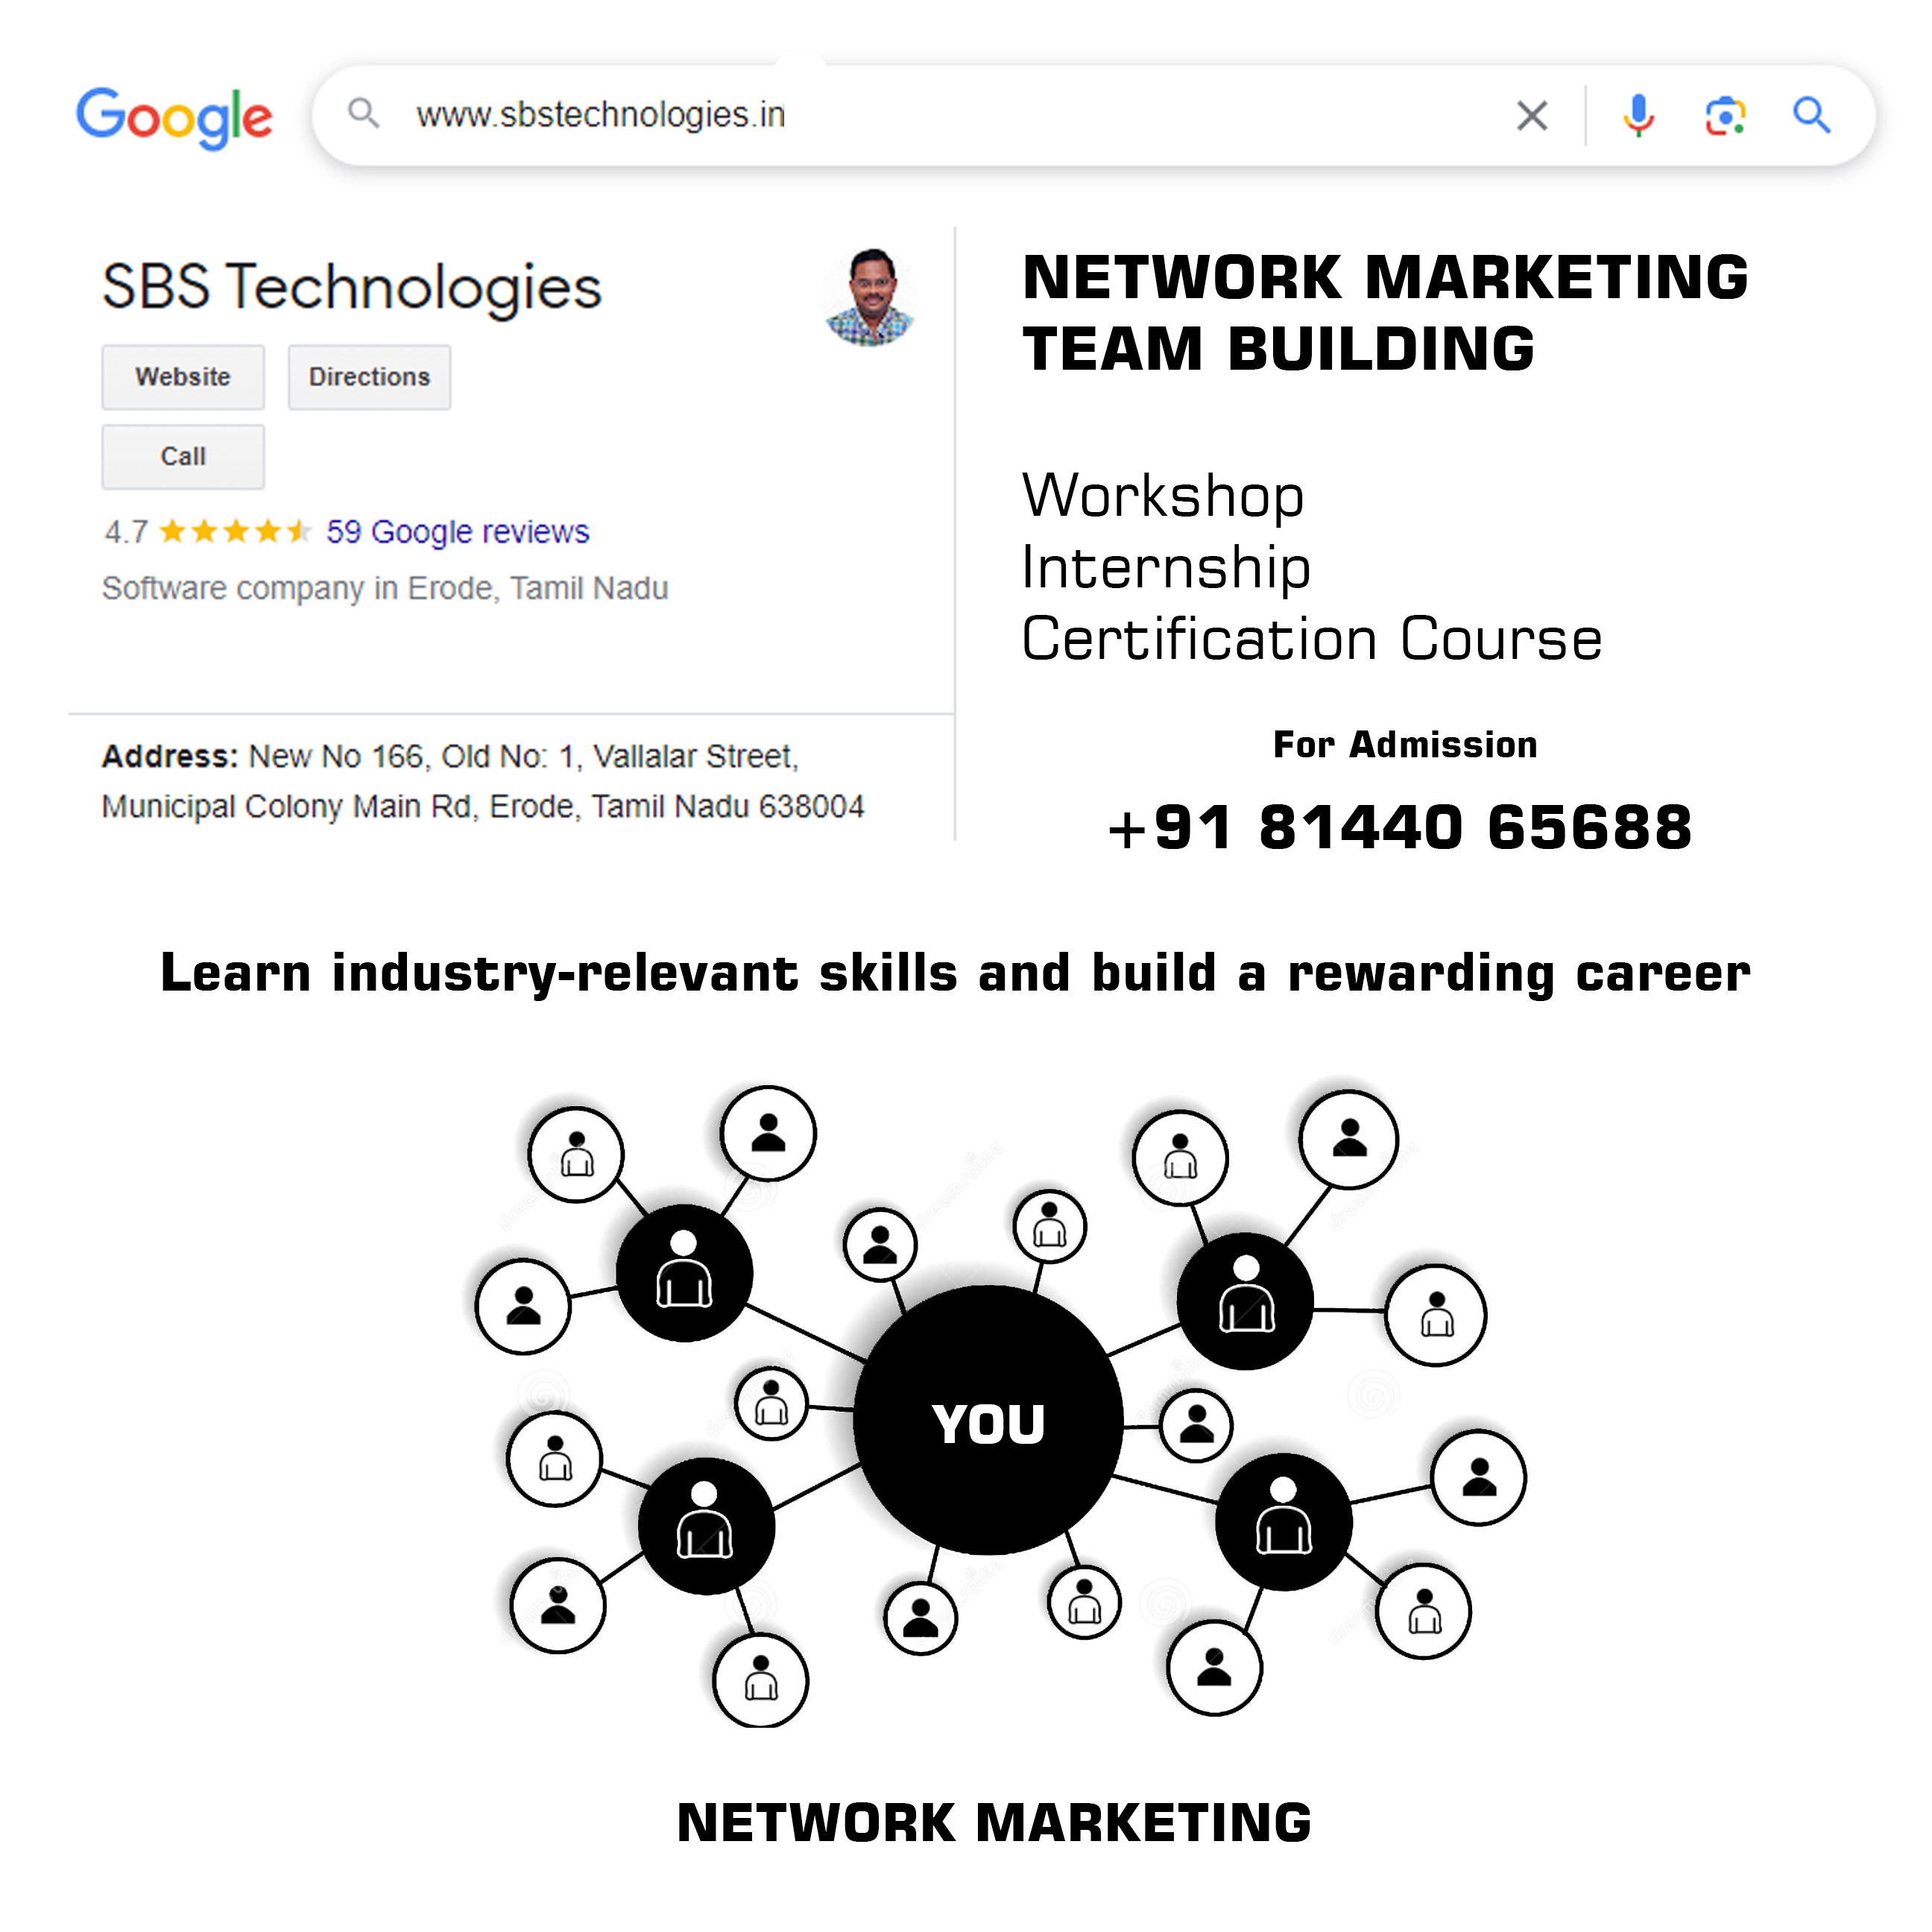 Network Marketing, Team Building